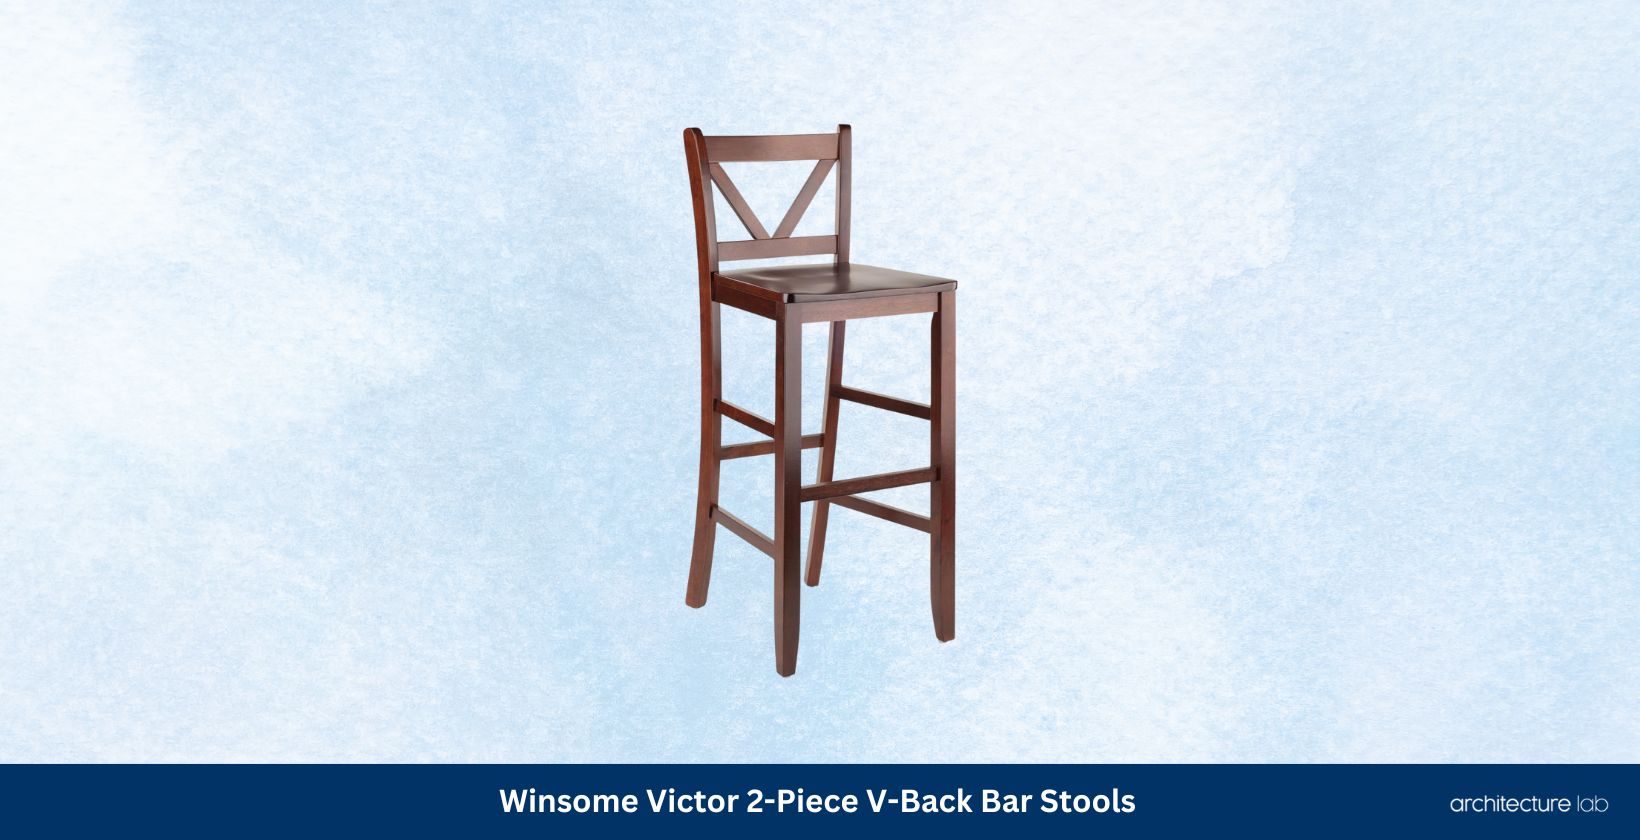 Winsome victor 2 piece v back bar stools